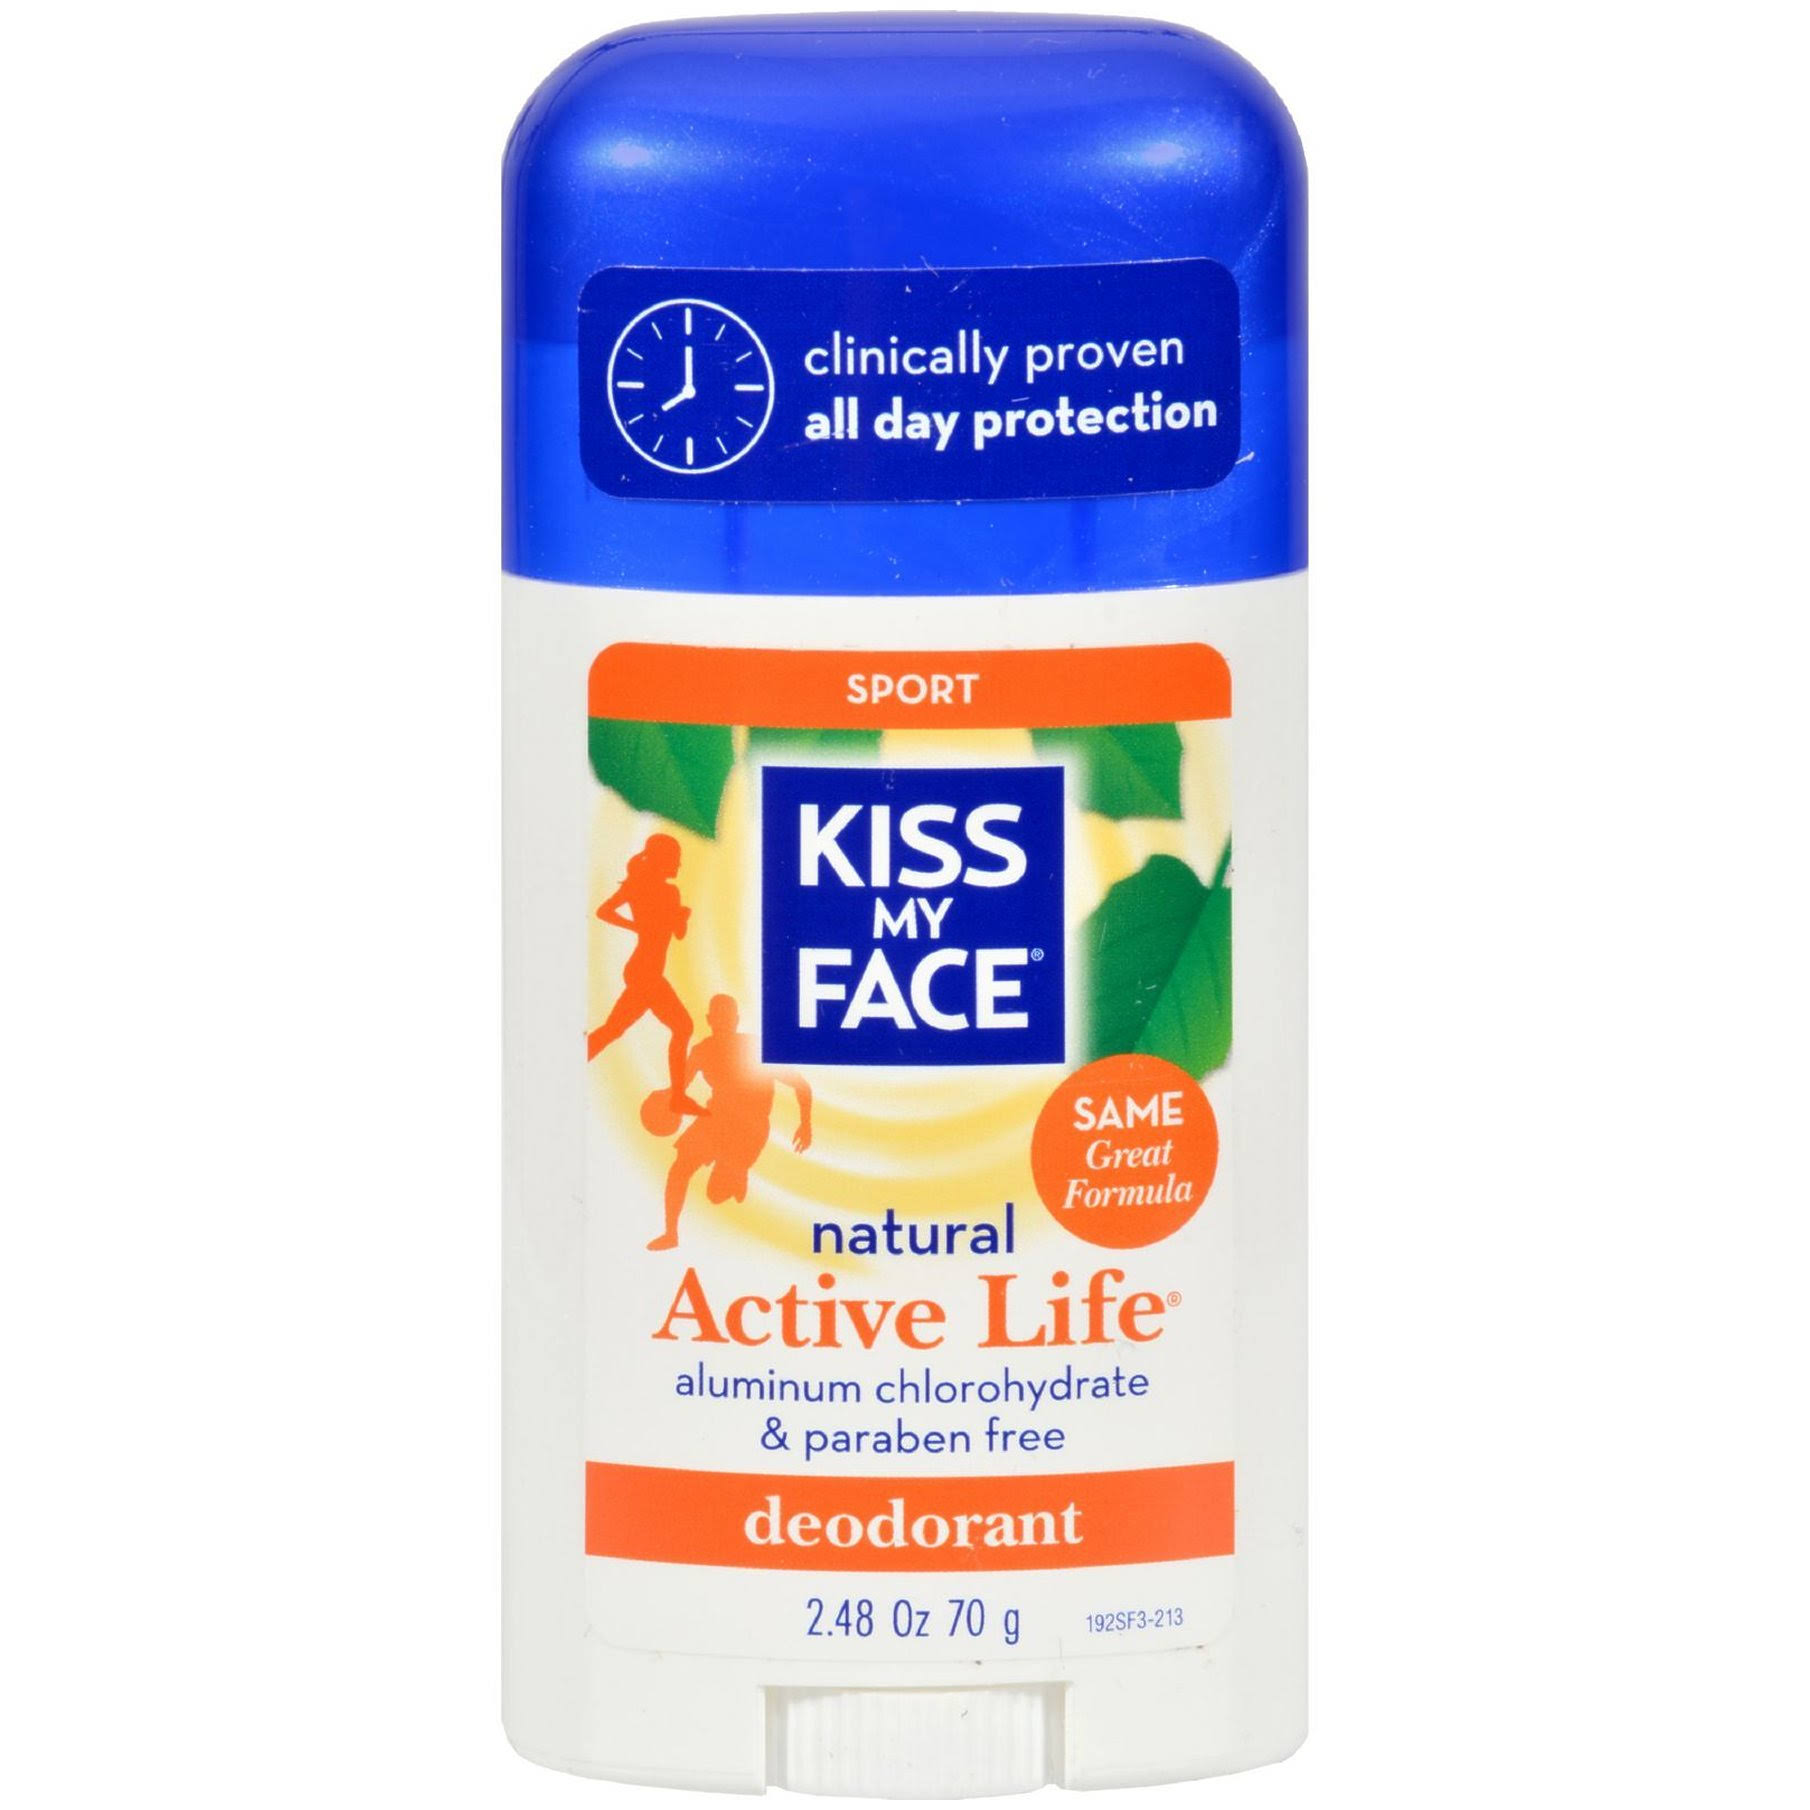 Kiss My Face Active Life Deodorant